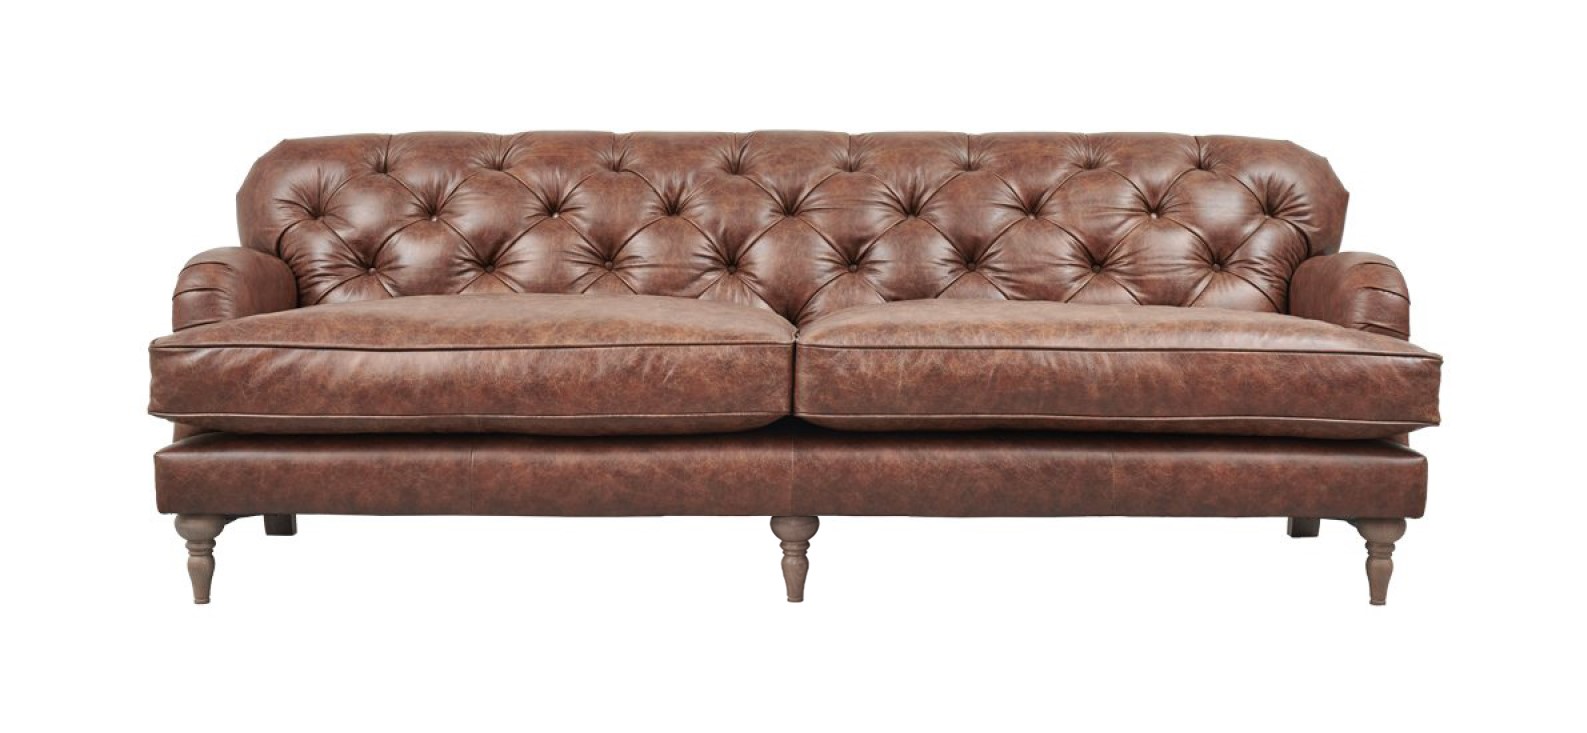 Earl 4 Seater Leather Sofa